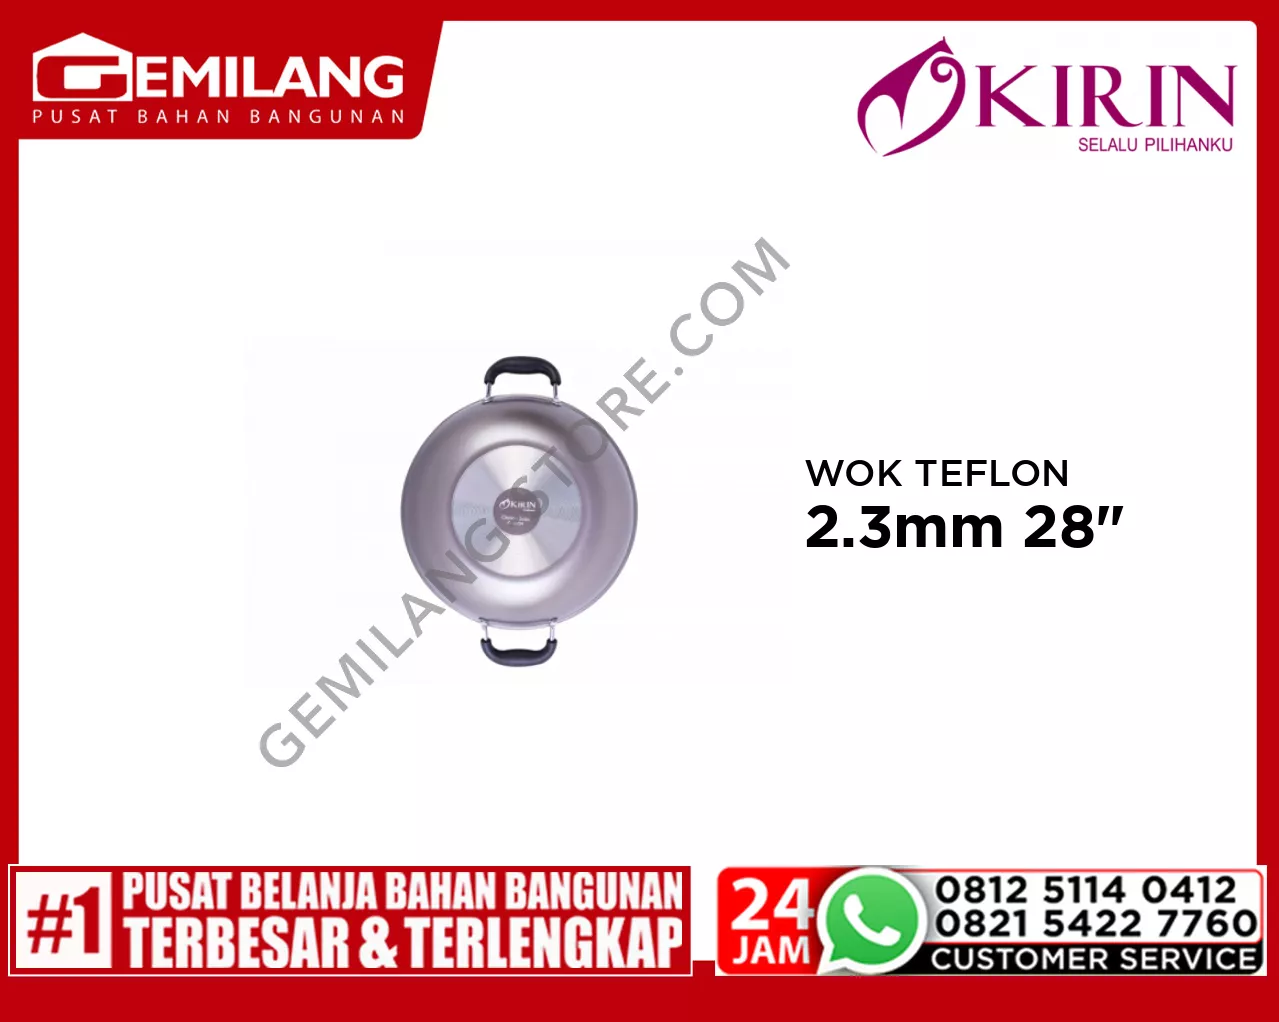 KIRIN CLARINET WOK TEFLON CLASSIC 2.3mm 28inch